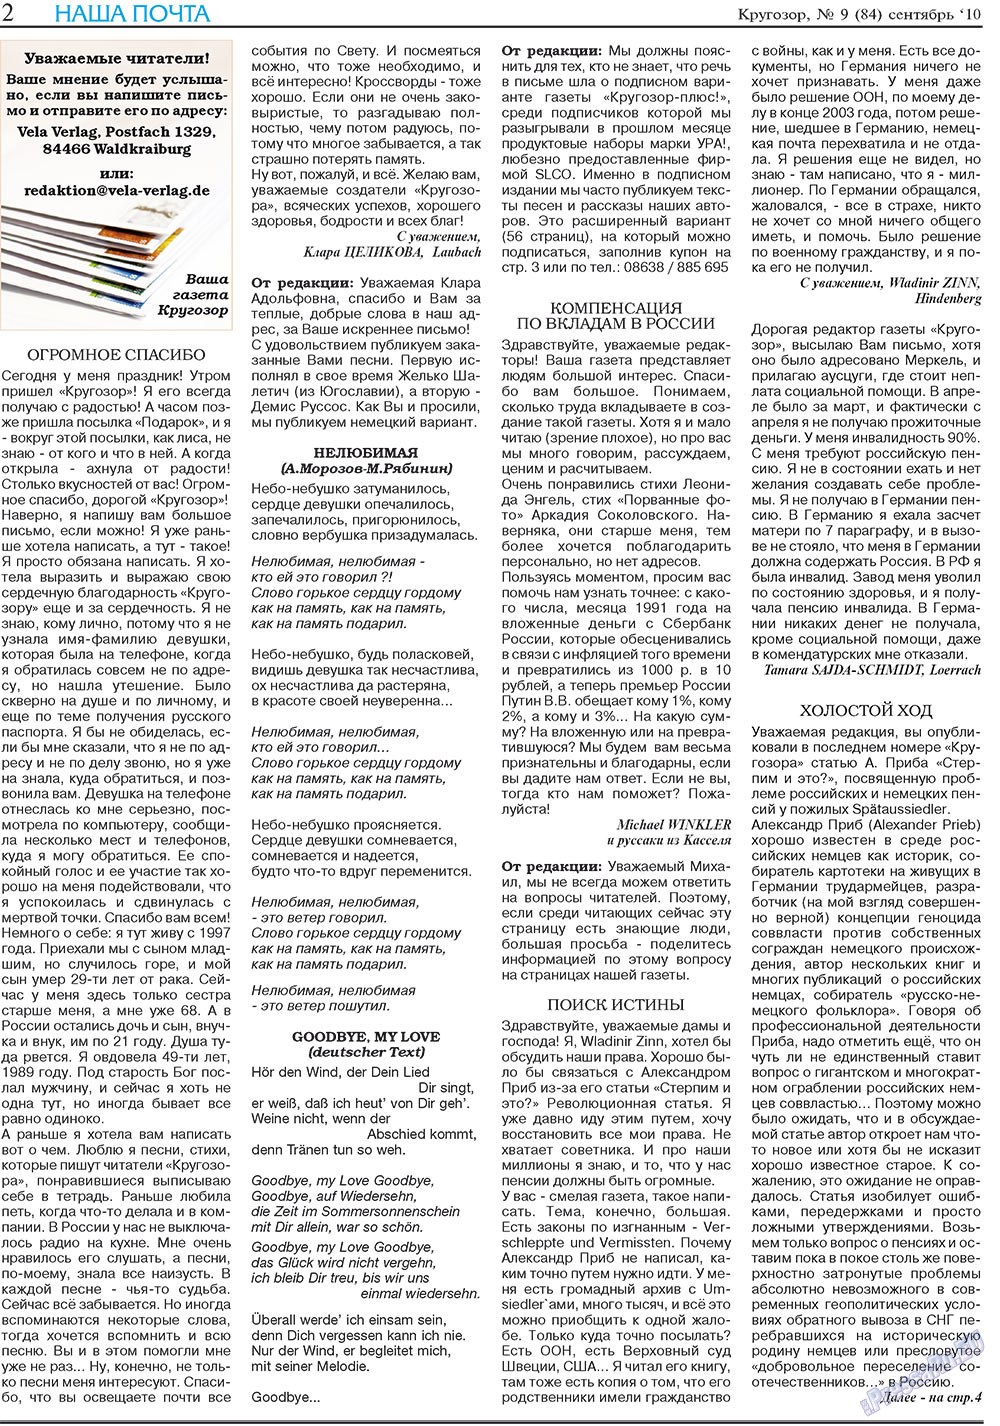 Кругозор плюс! (газета). 2010 год, номер 9, стр. 2